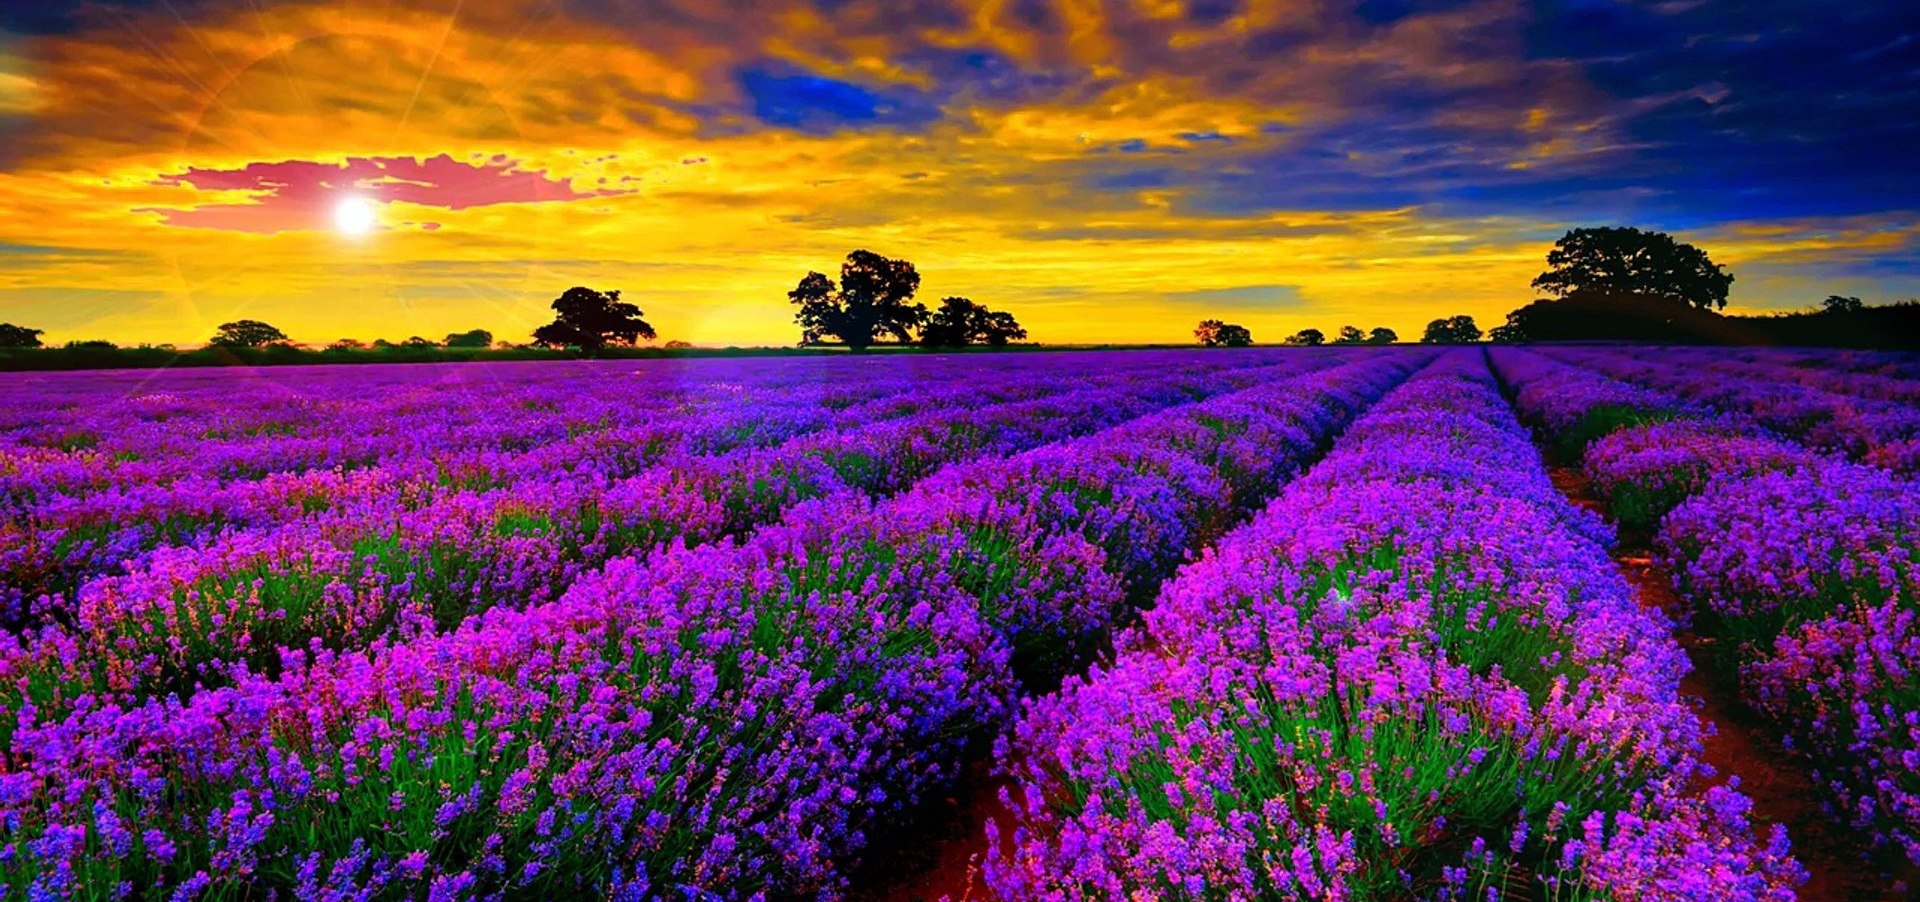 Lavender fields, France